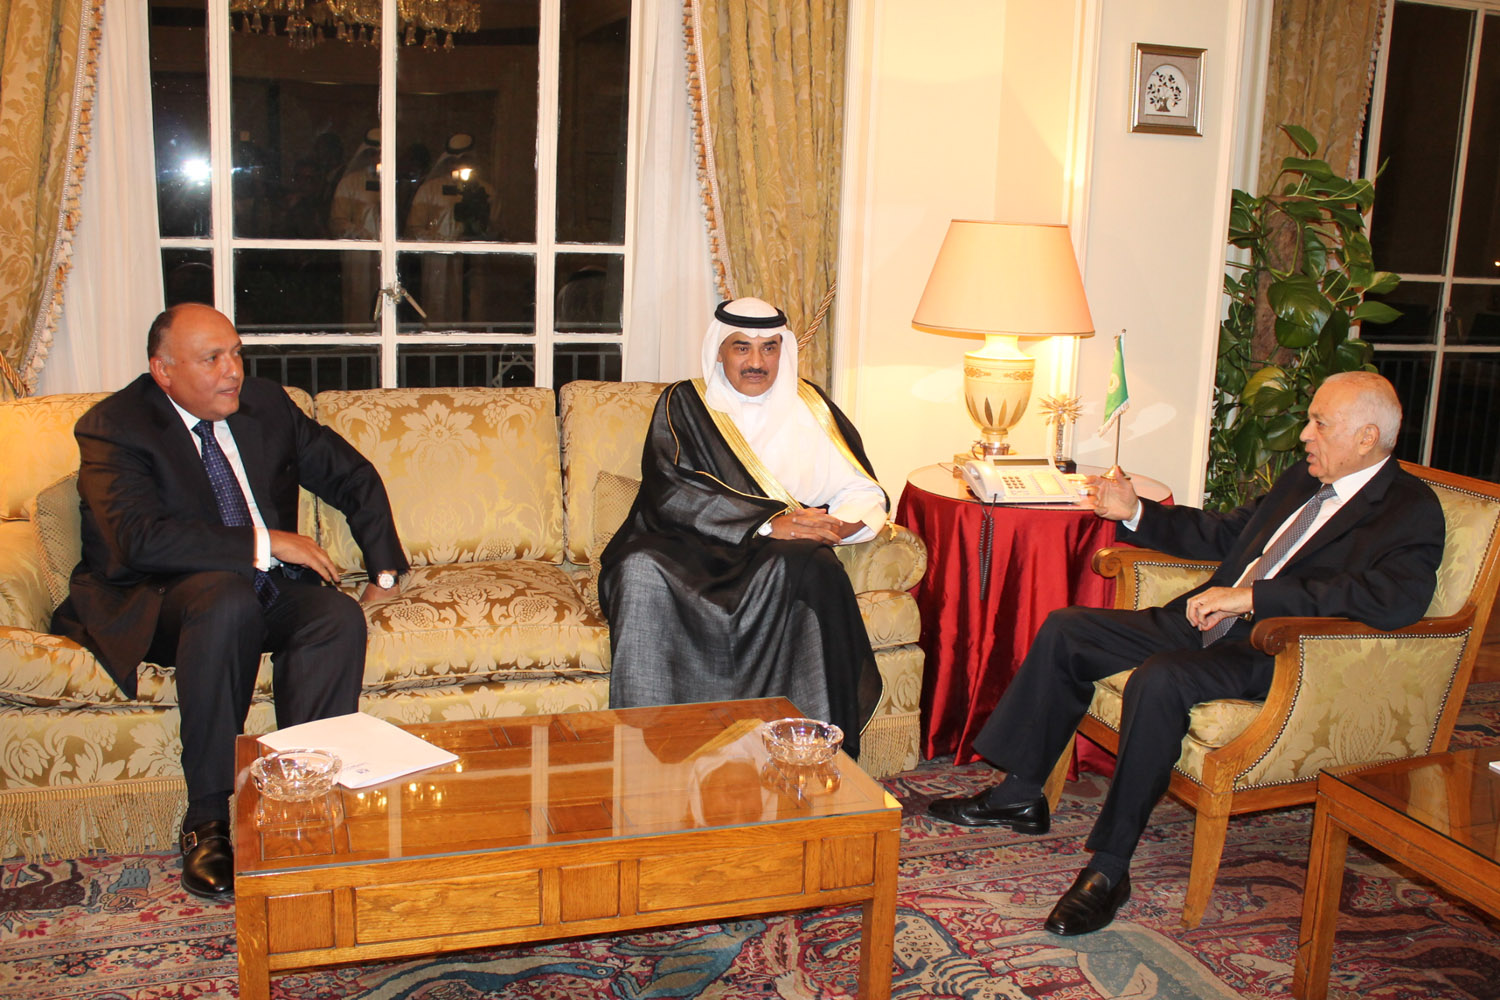 Kuwait's First Deputy Prime Minister and Foreign Minister Sheikh Sabah Khaled Al-Hamad Al-Sabah meets with Arab League Secretary General Nabil Al-Araby and Egyptian Foreign Minister Sameh Shukri